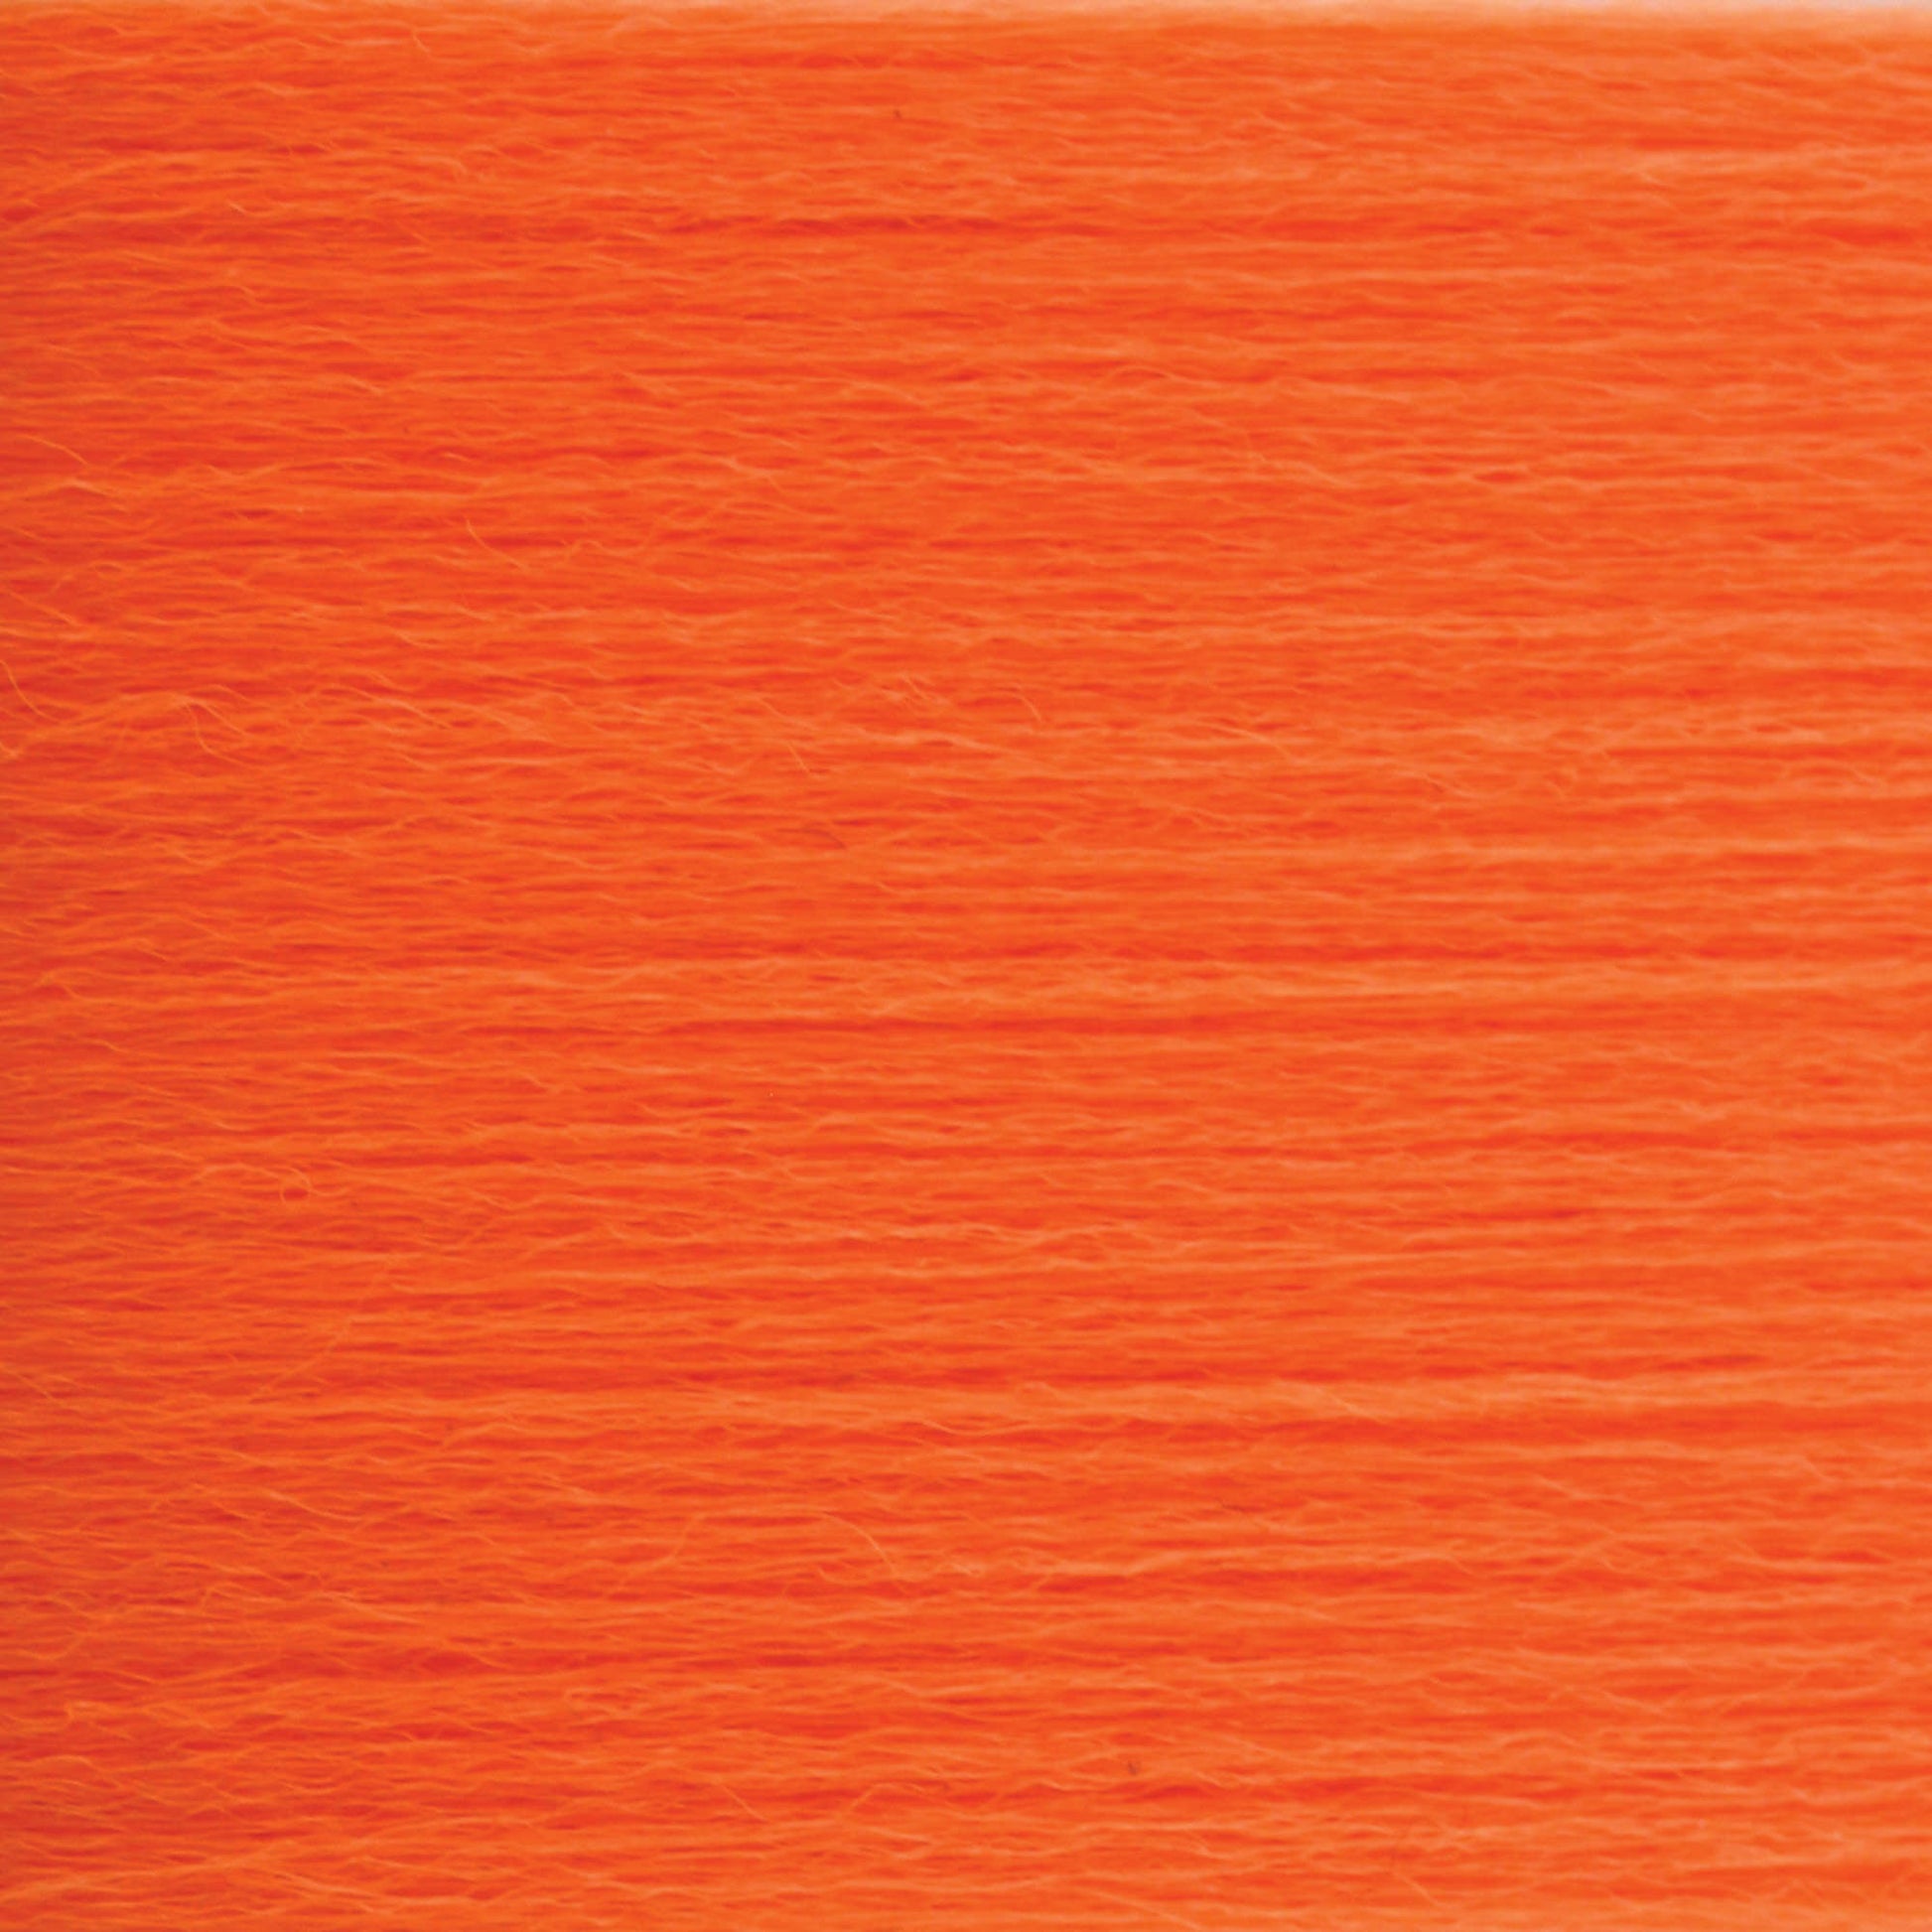 Phentex Slipper & Craft Yarn - Discontinued Shades Neon Orange